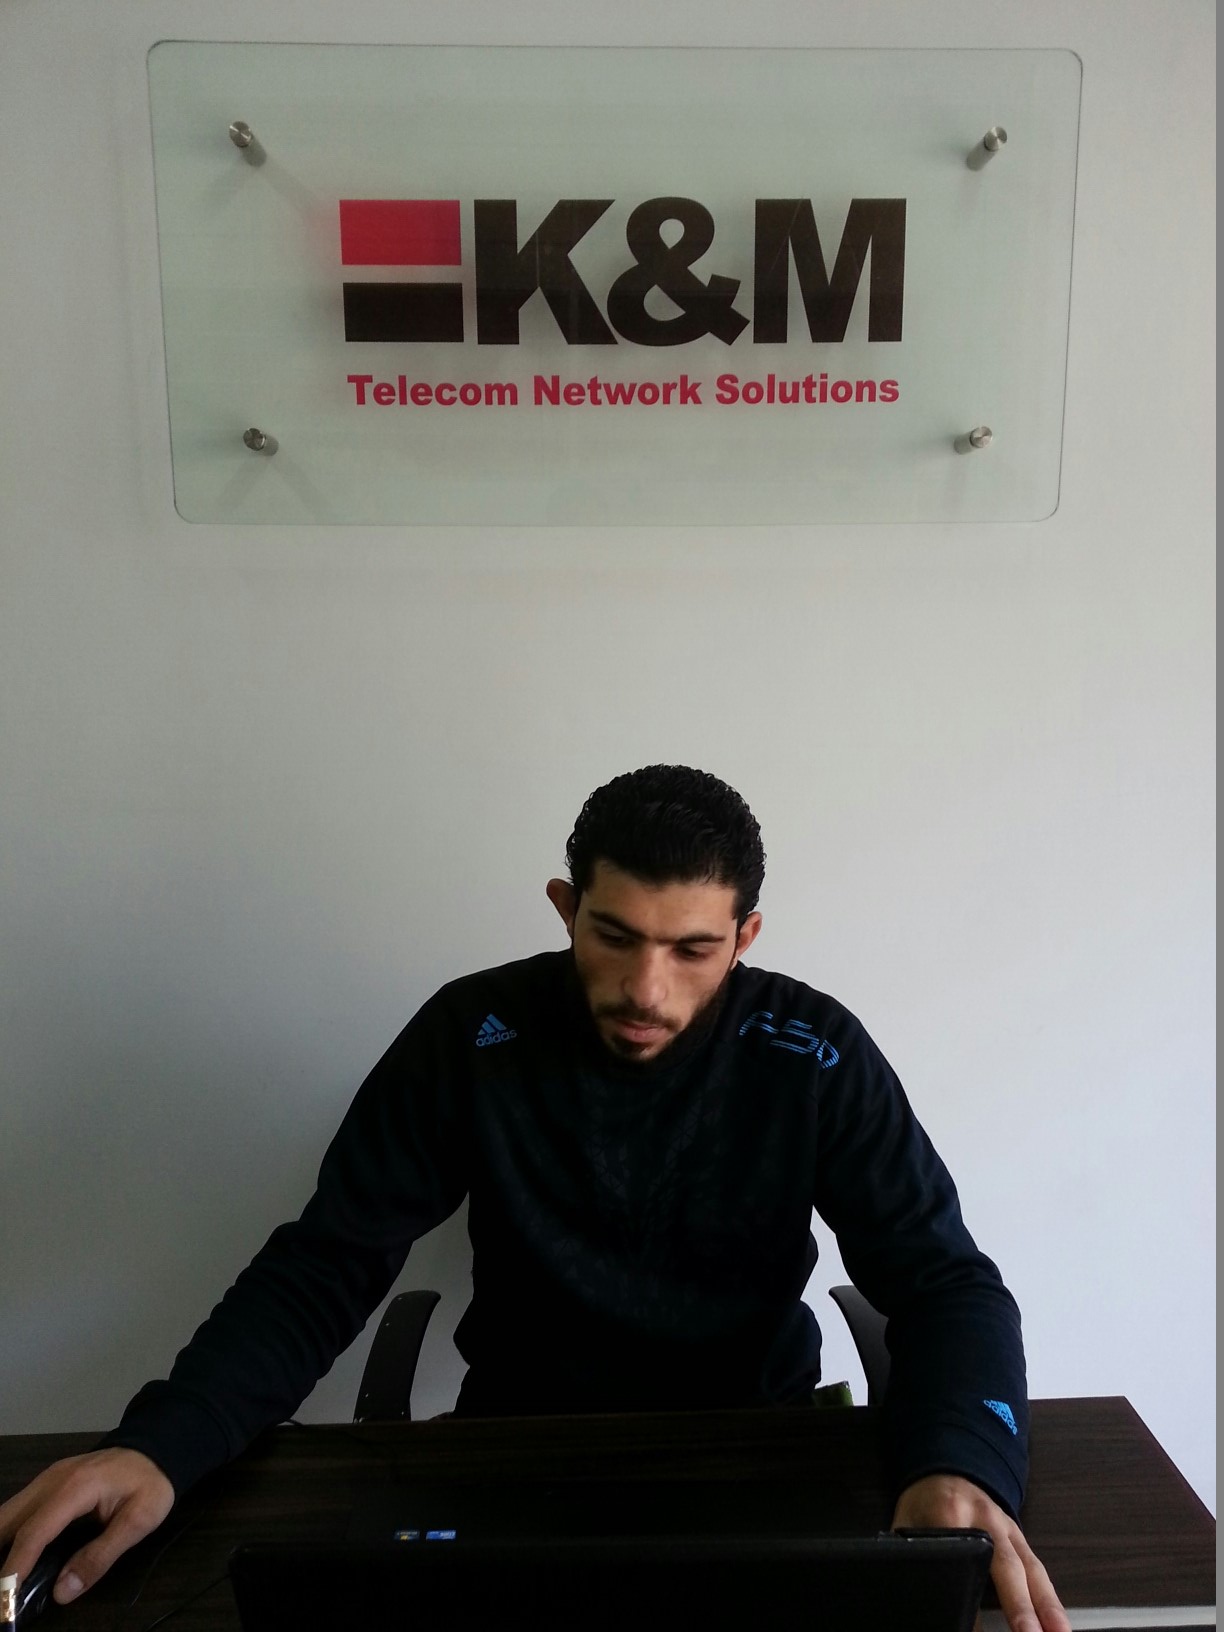 K&M has a presence in Egypt